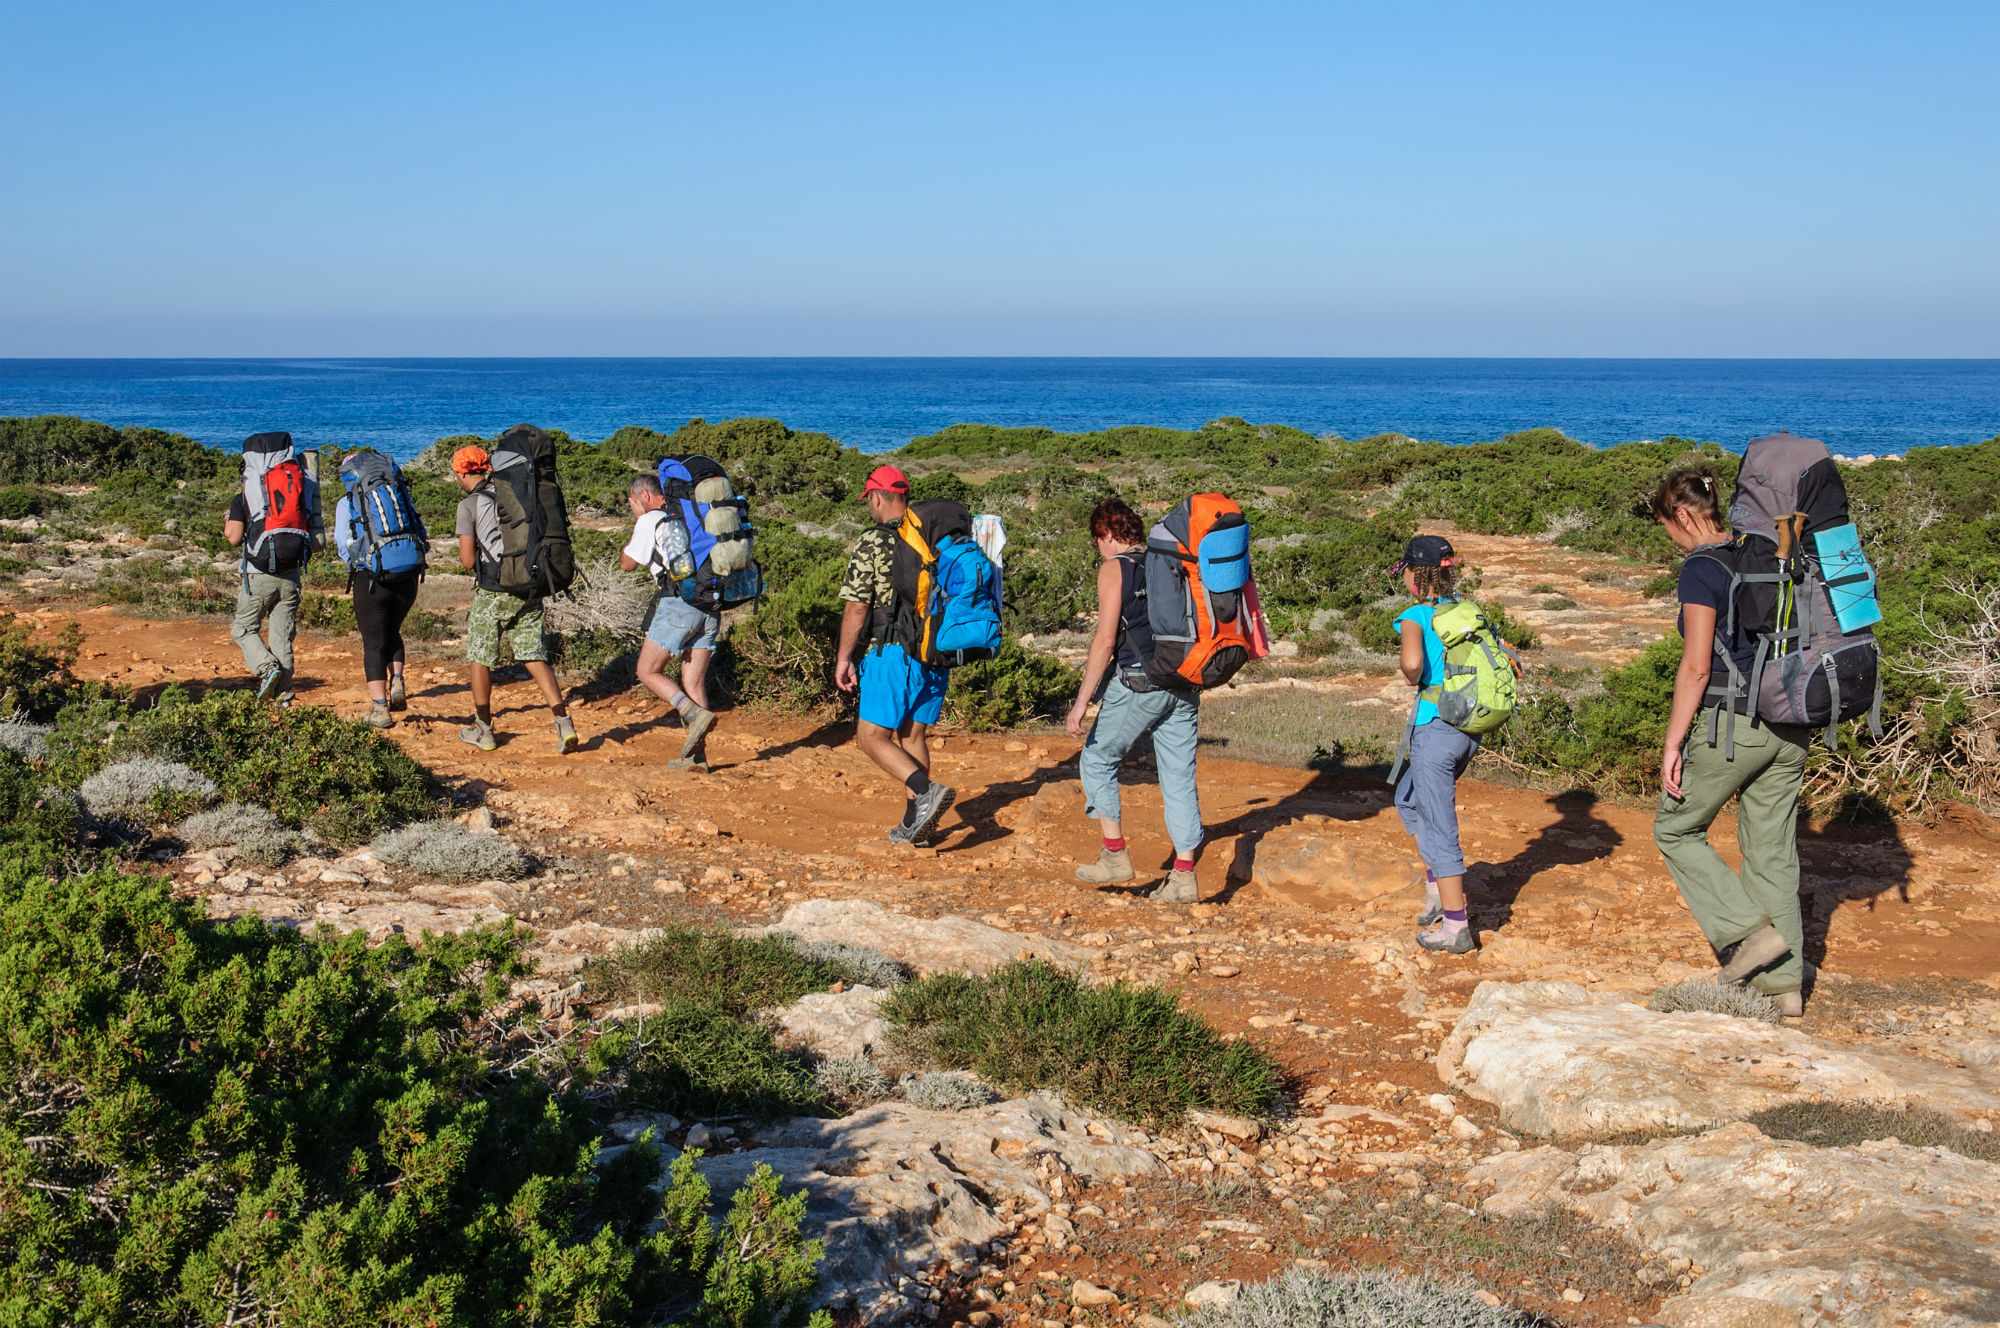 Hiking in Cyprus